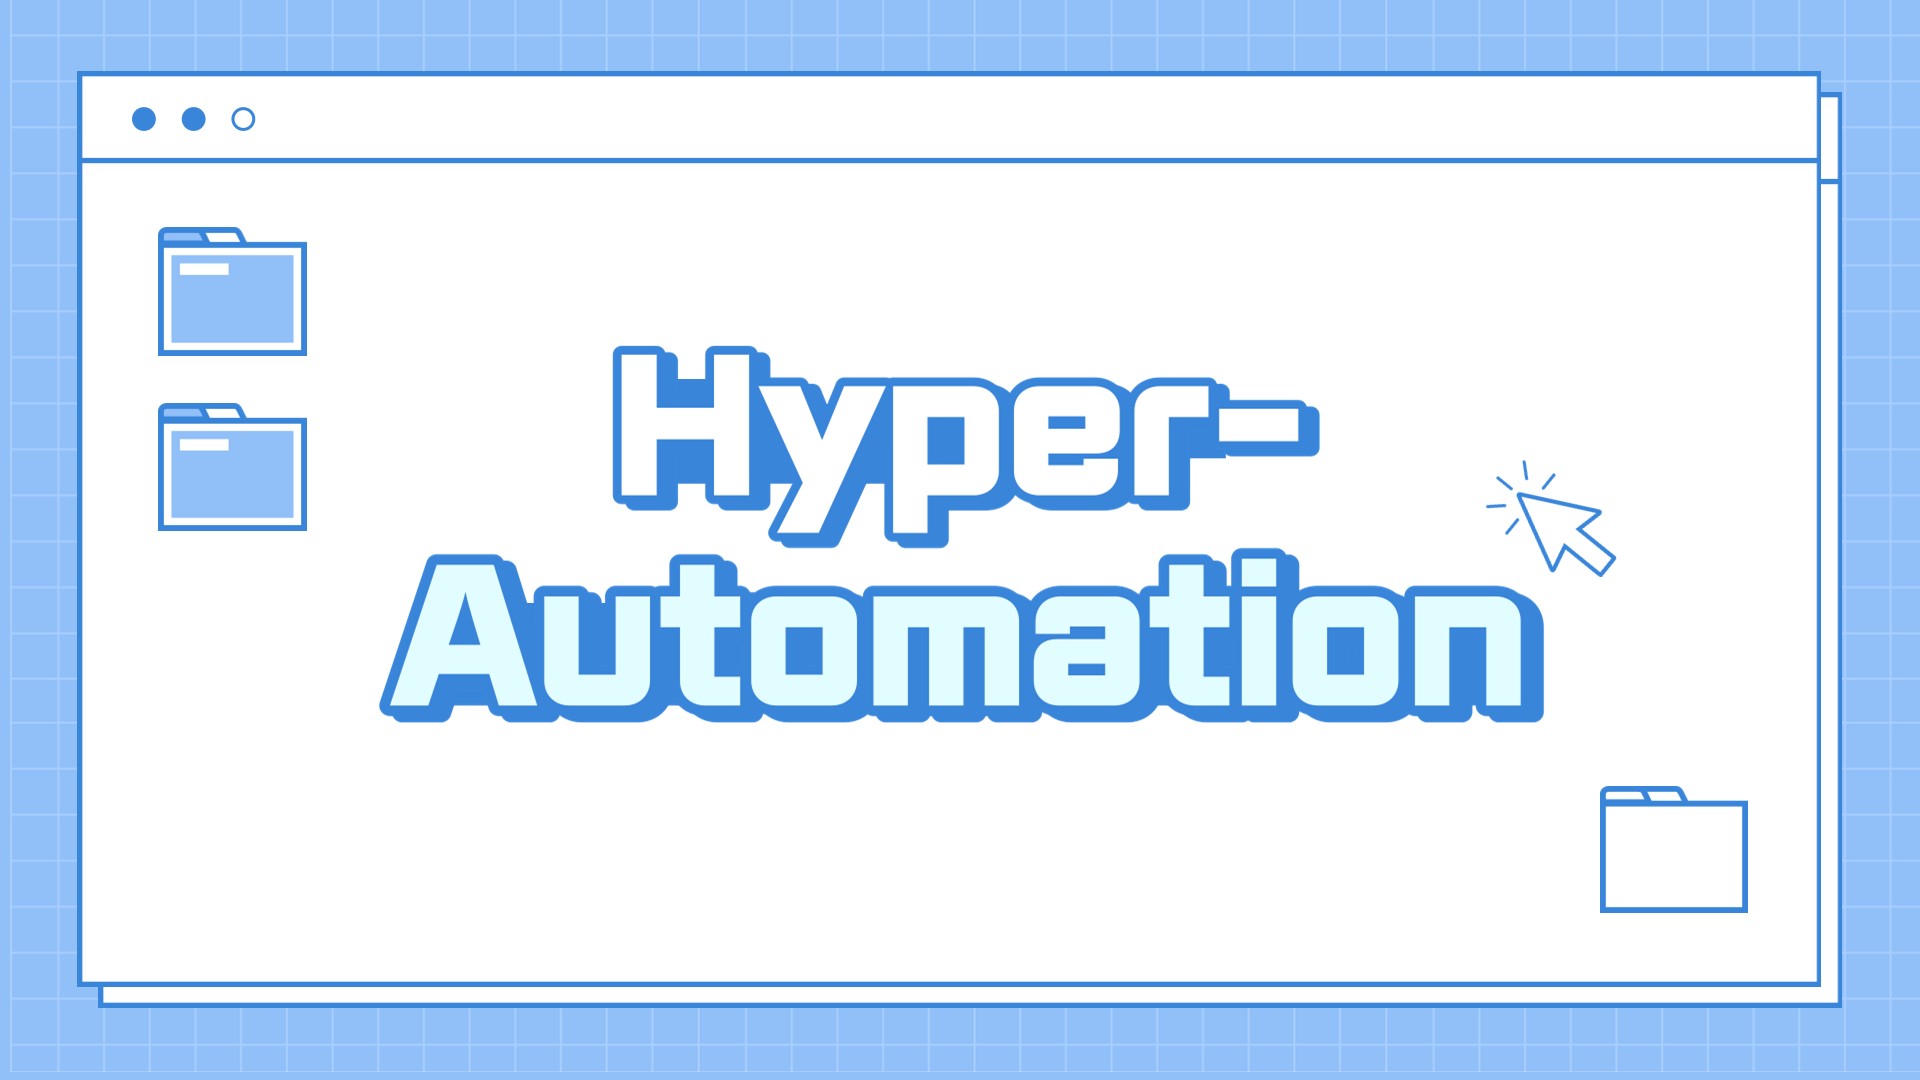 Hyper-automation